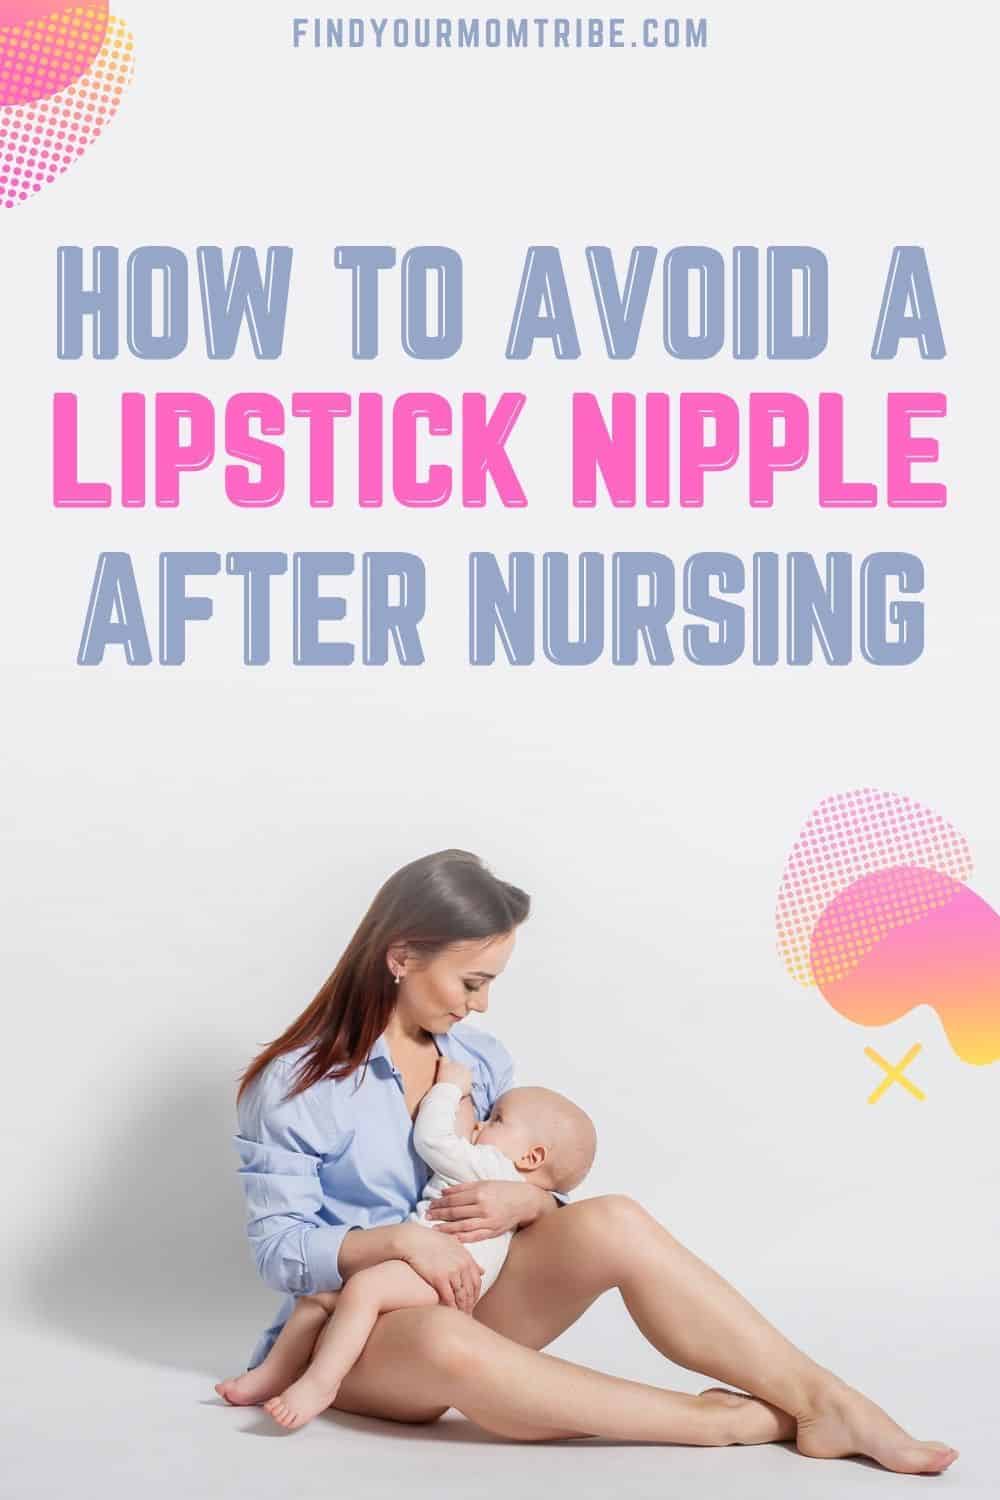 lipstick nipple after nursing pinterest